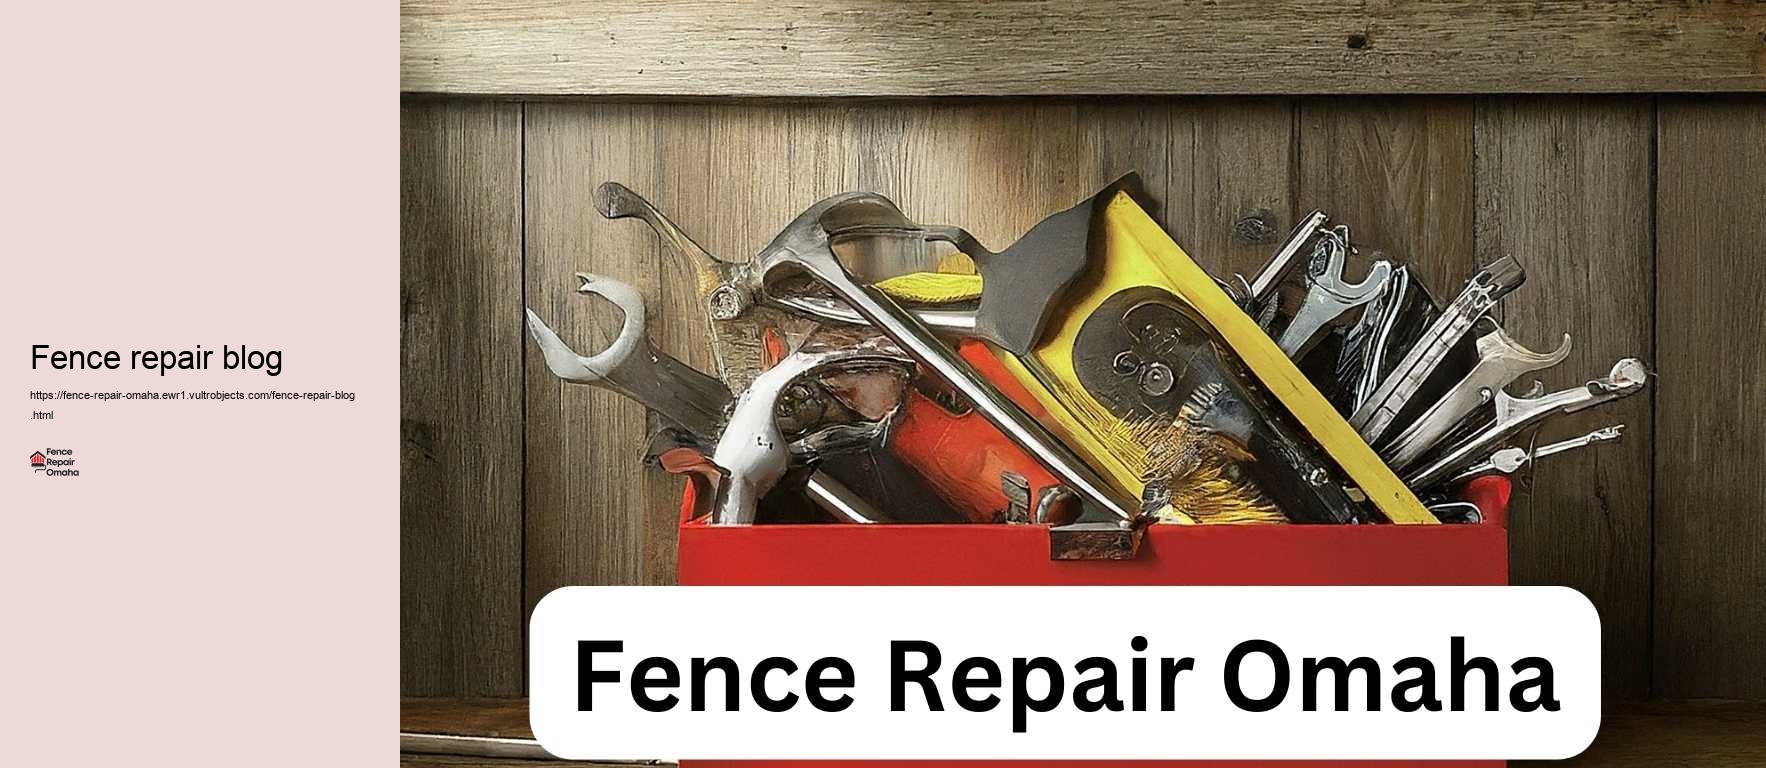 Fence repair blog